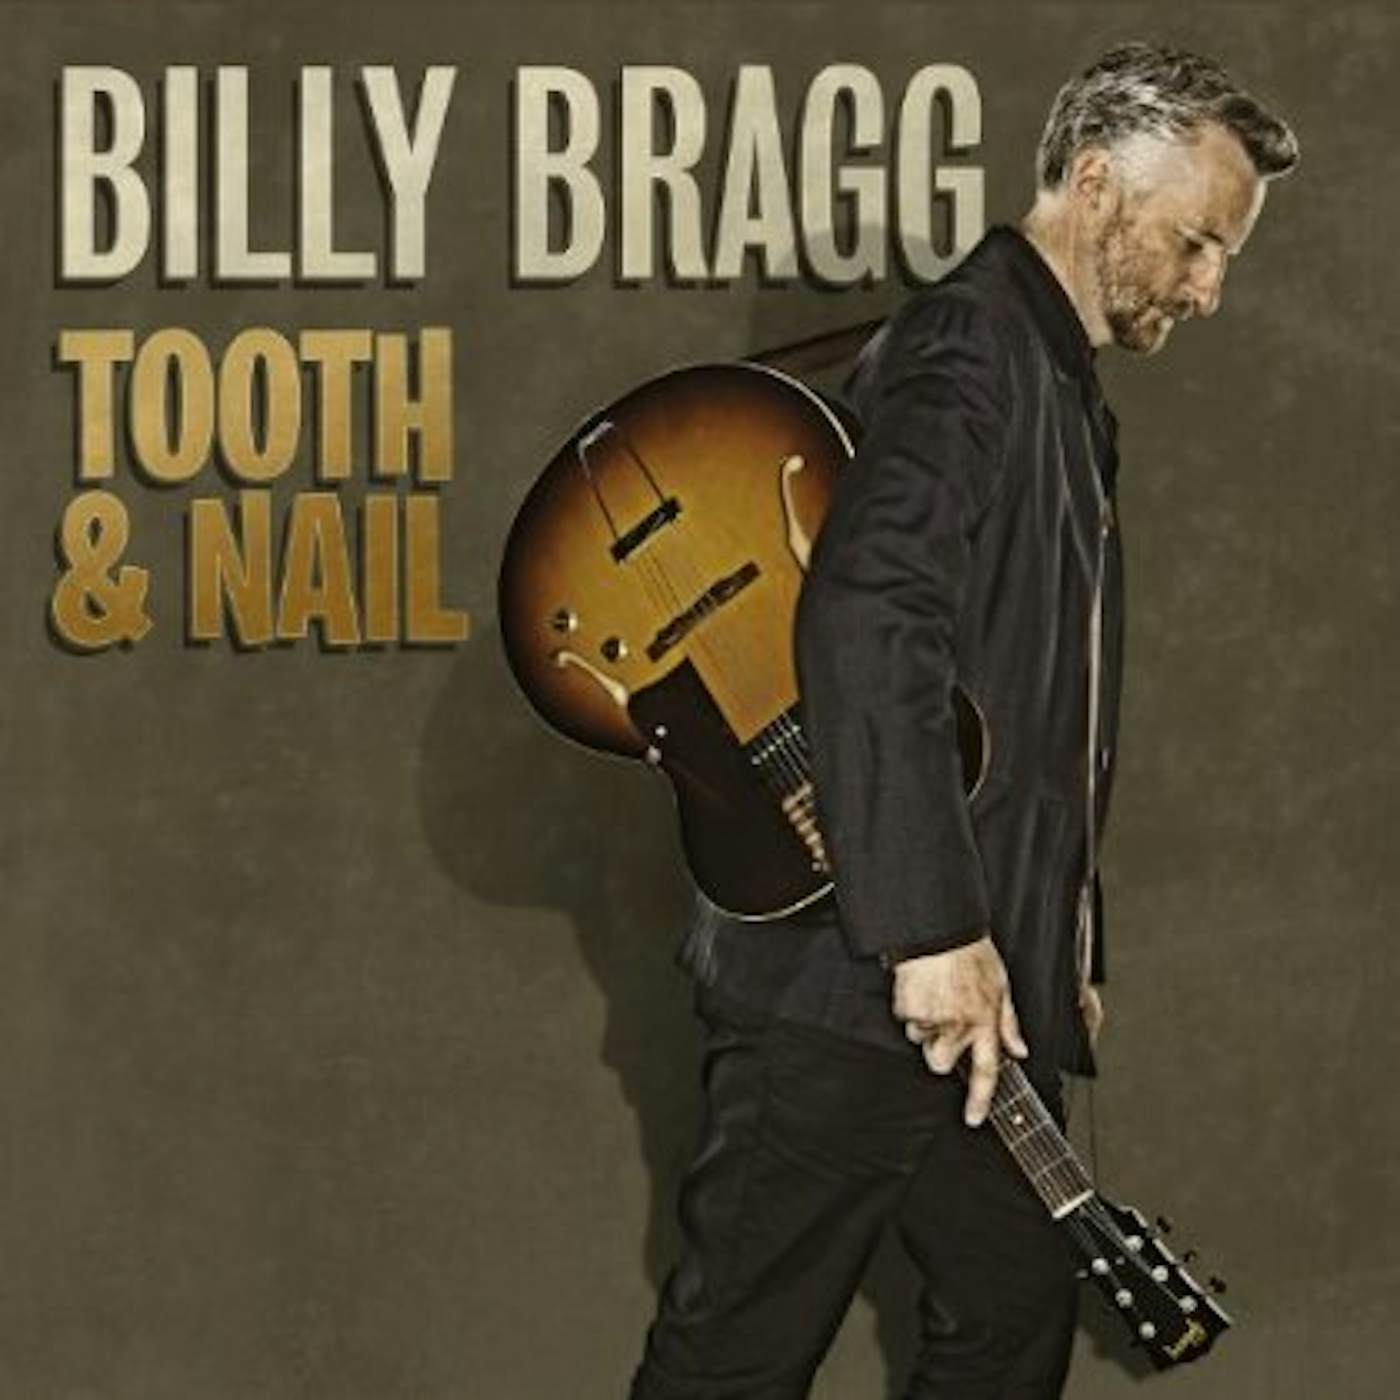 Billy Bragg TOOTH & NAIL CD